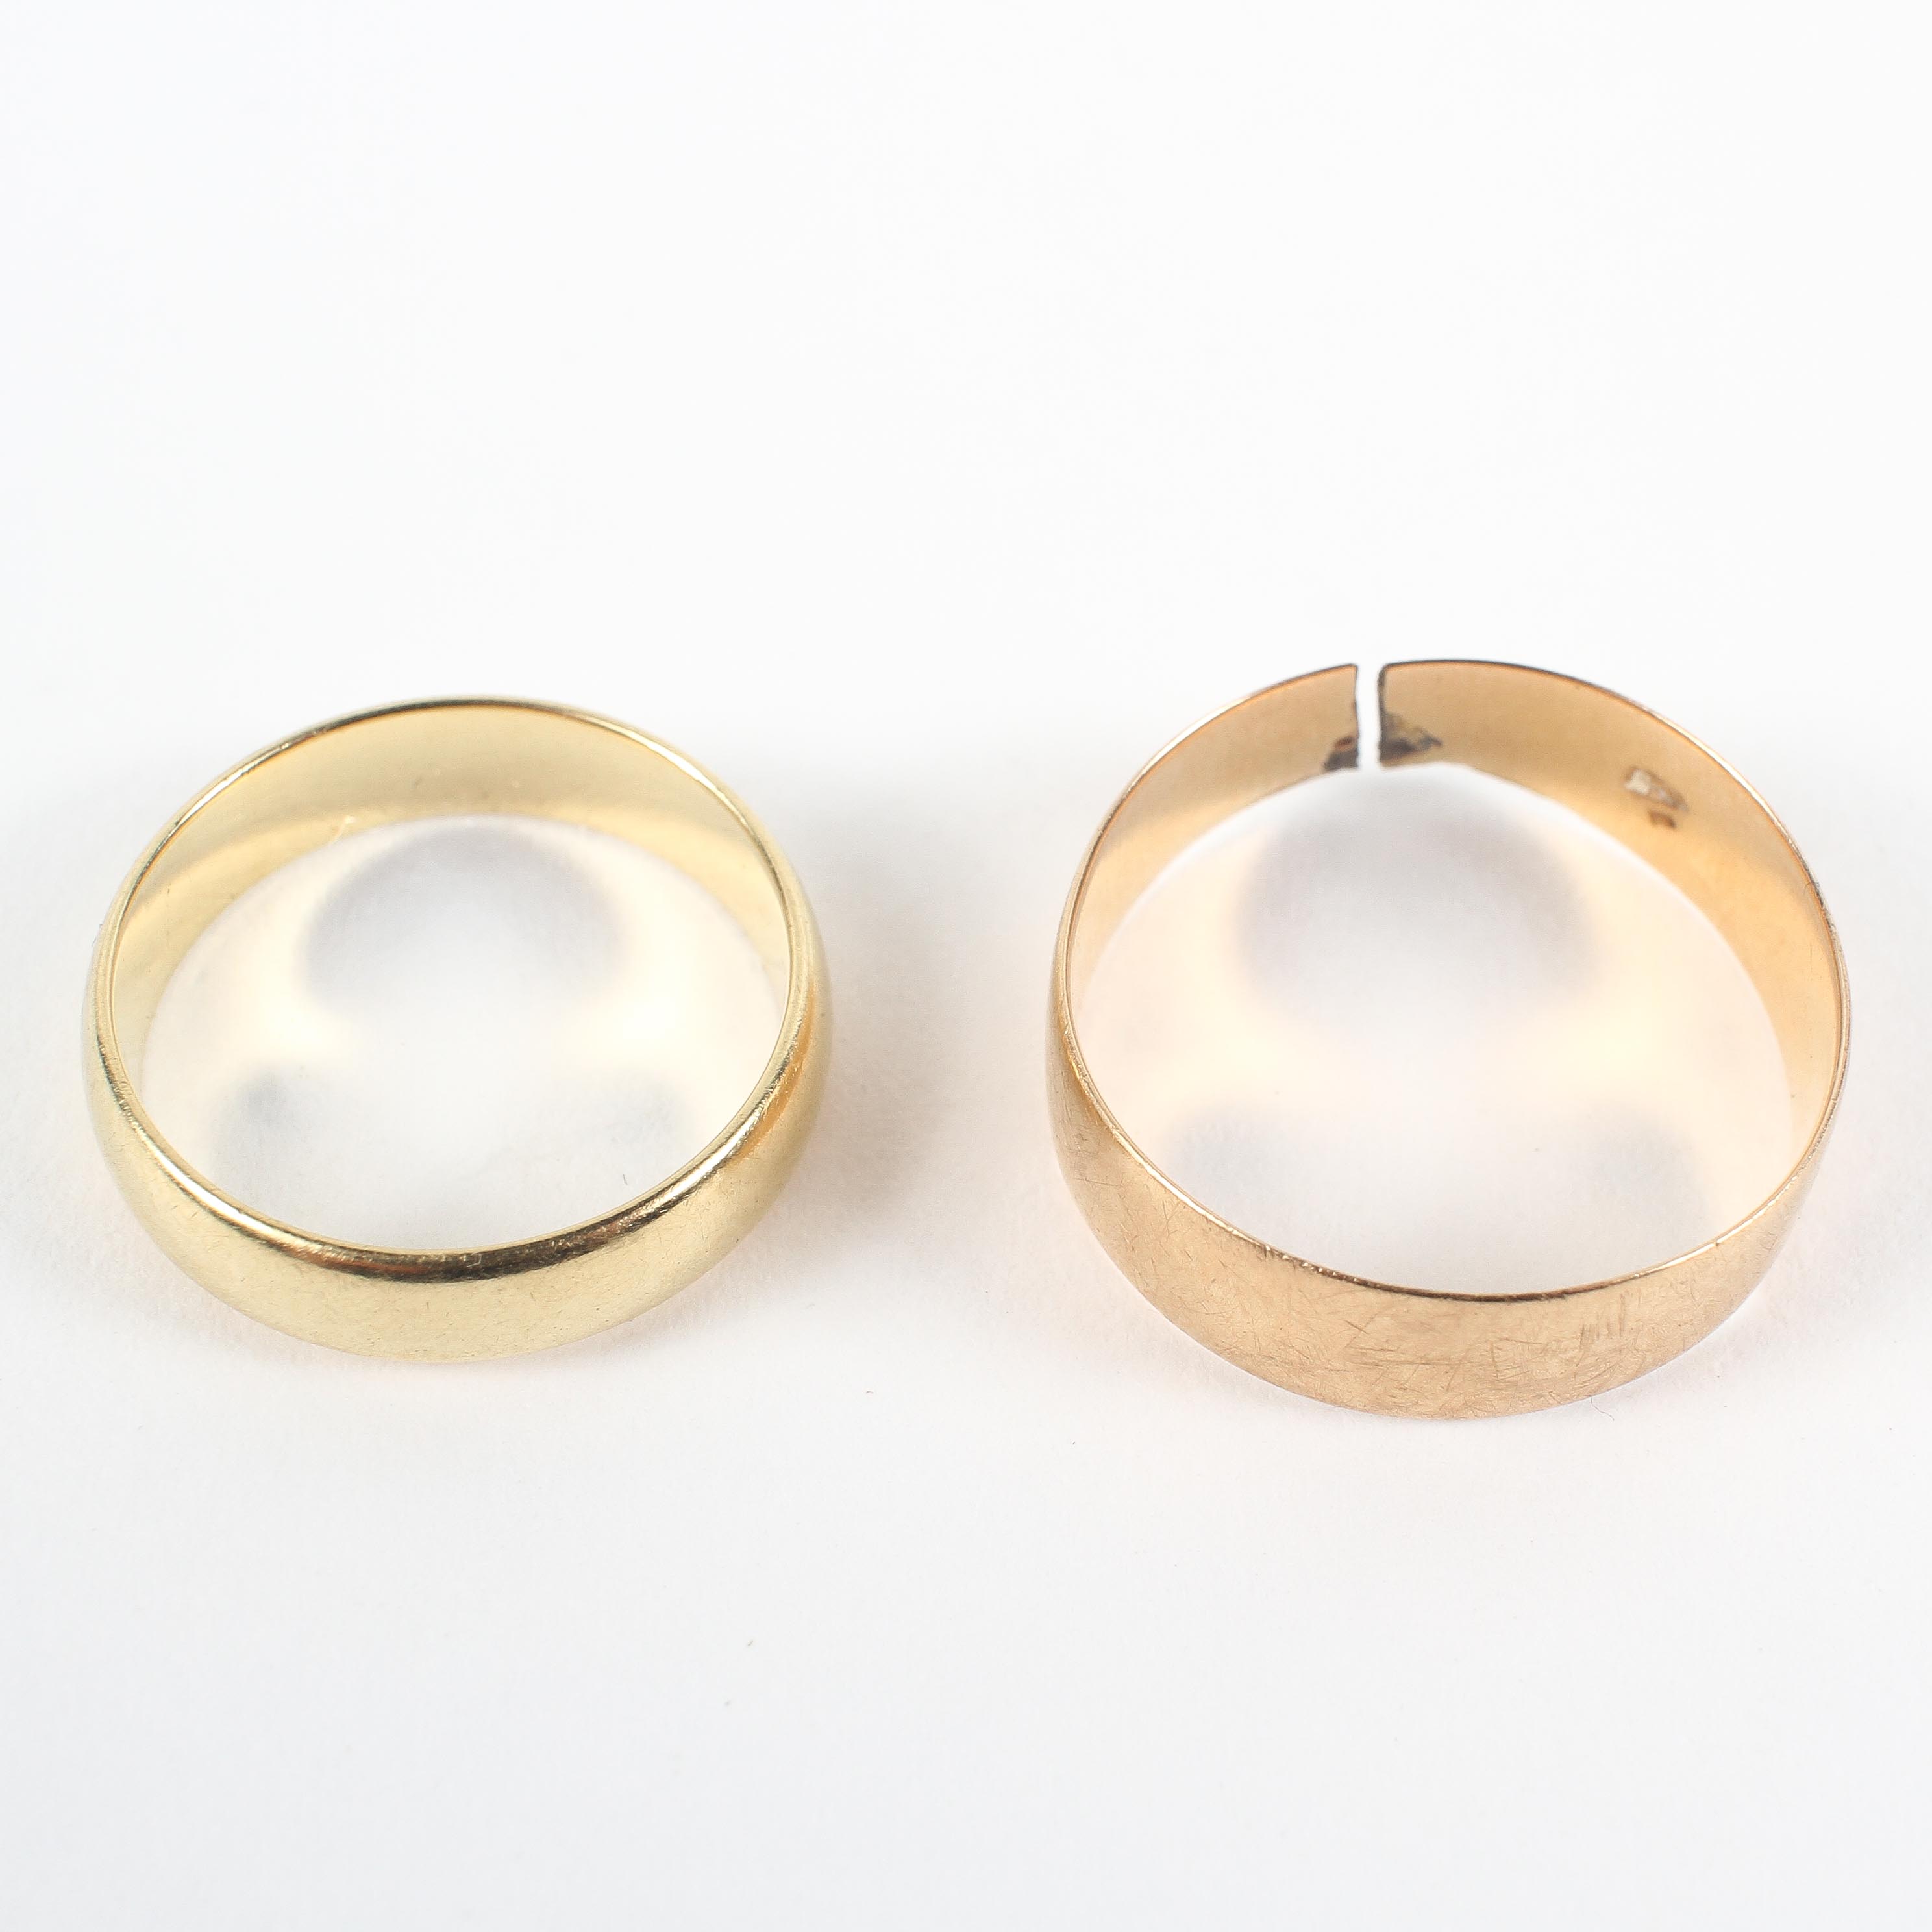 A 18ct flat 5.5mm wedding ring, size O; A 18ct D shape 4mmm wedding ring, size J.